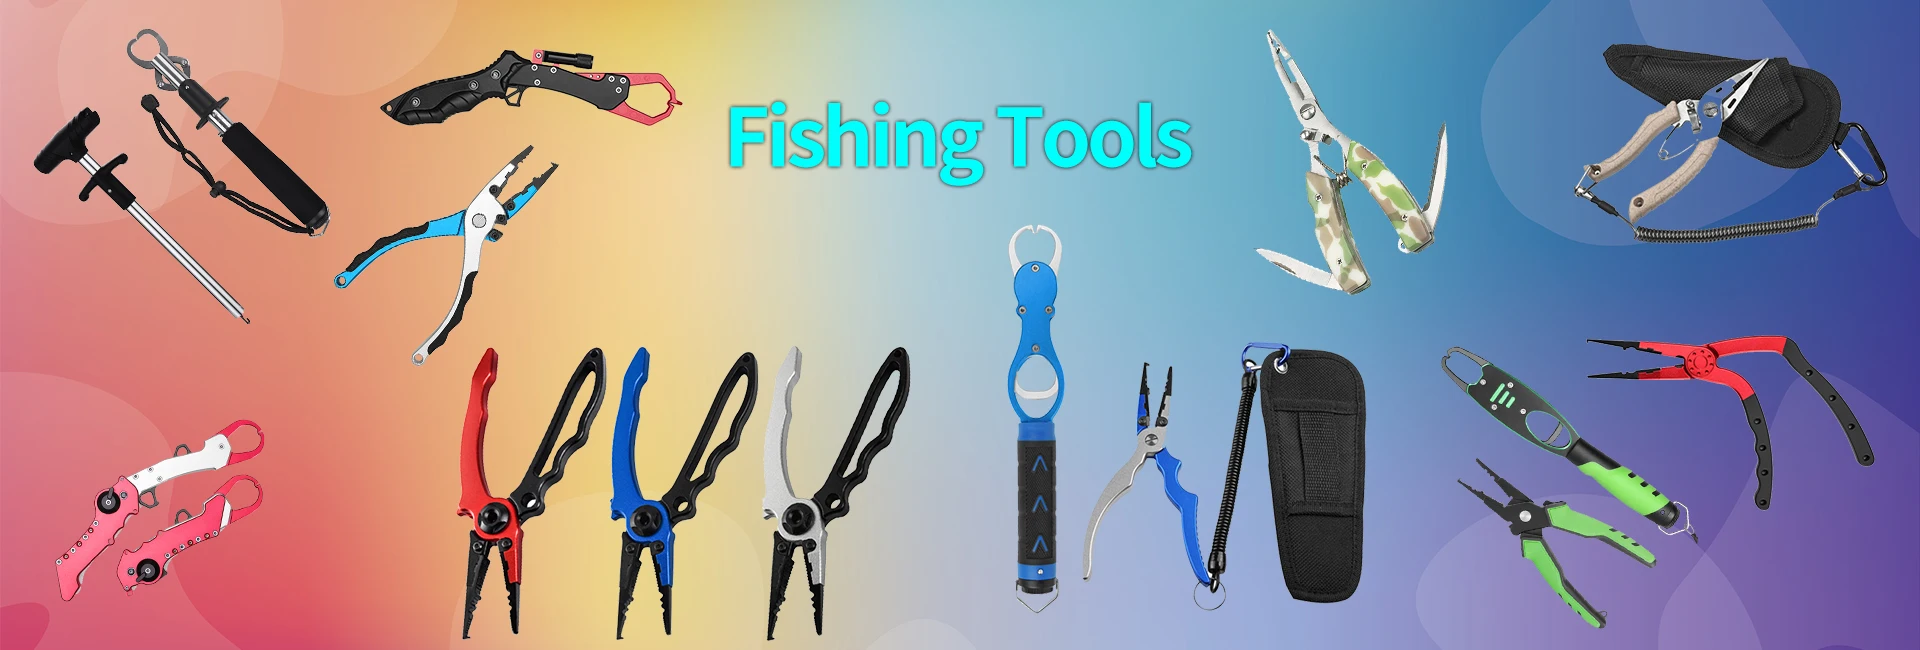 LINNHUE Portable Folding Multifunctional Fishing Pliers